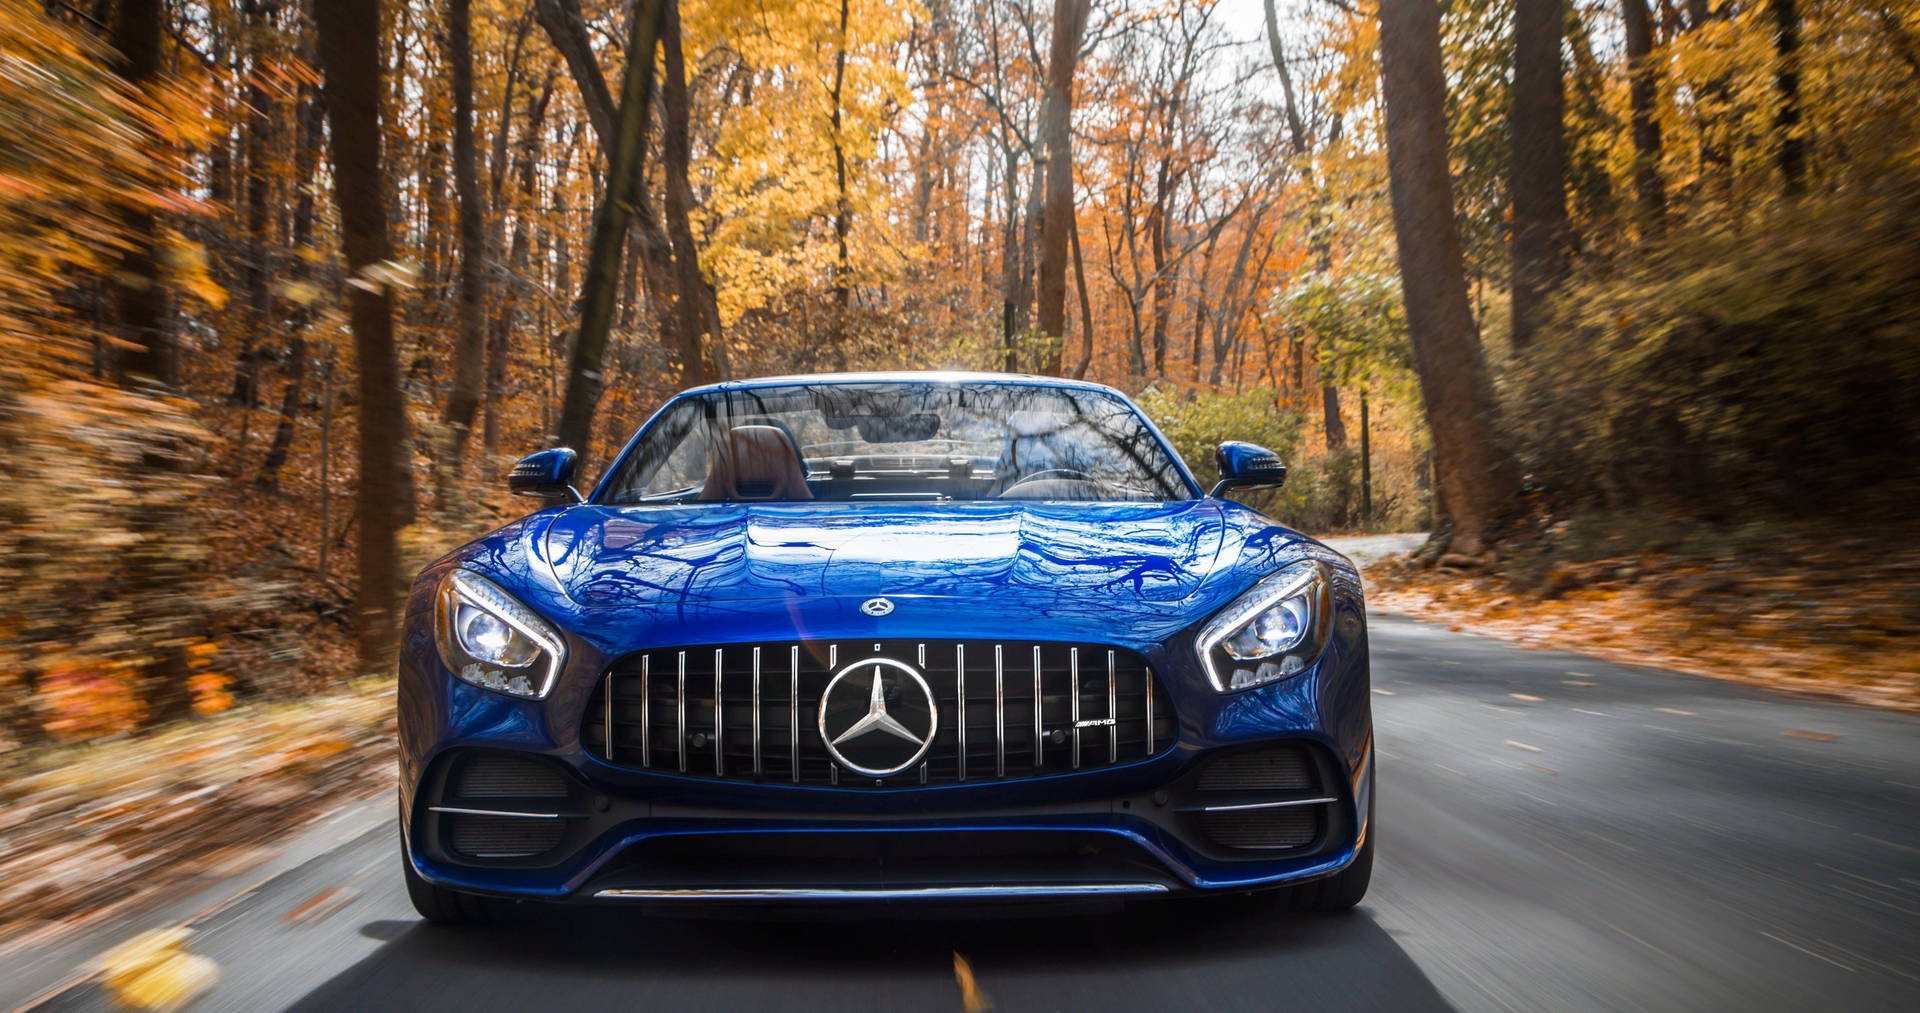 4k Mercedes-benz Car In Autumn Woods Background